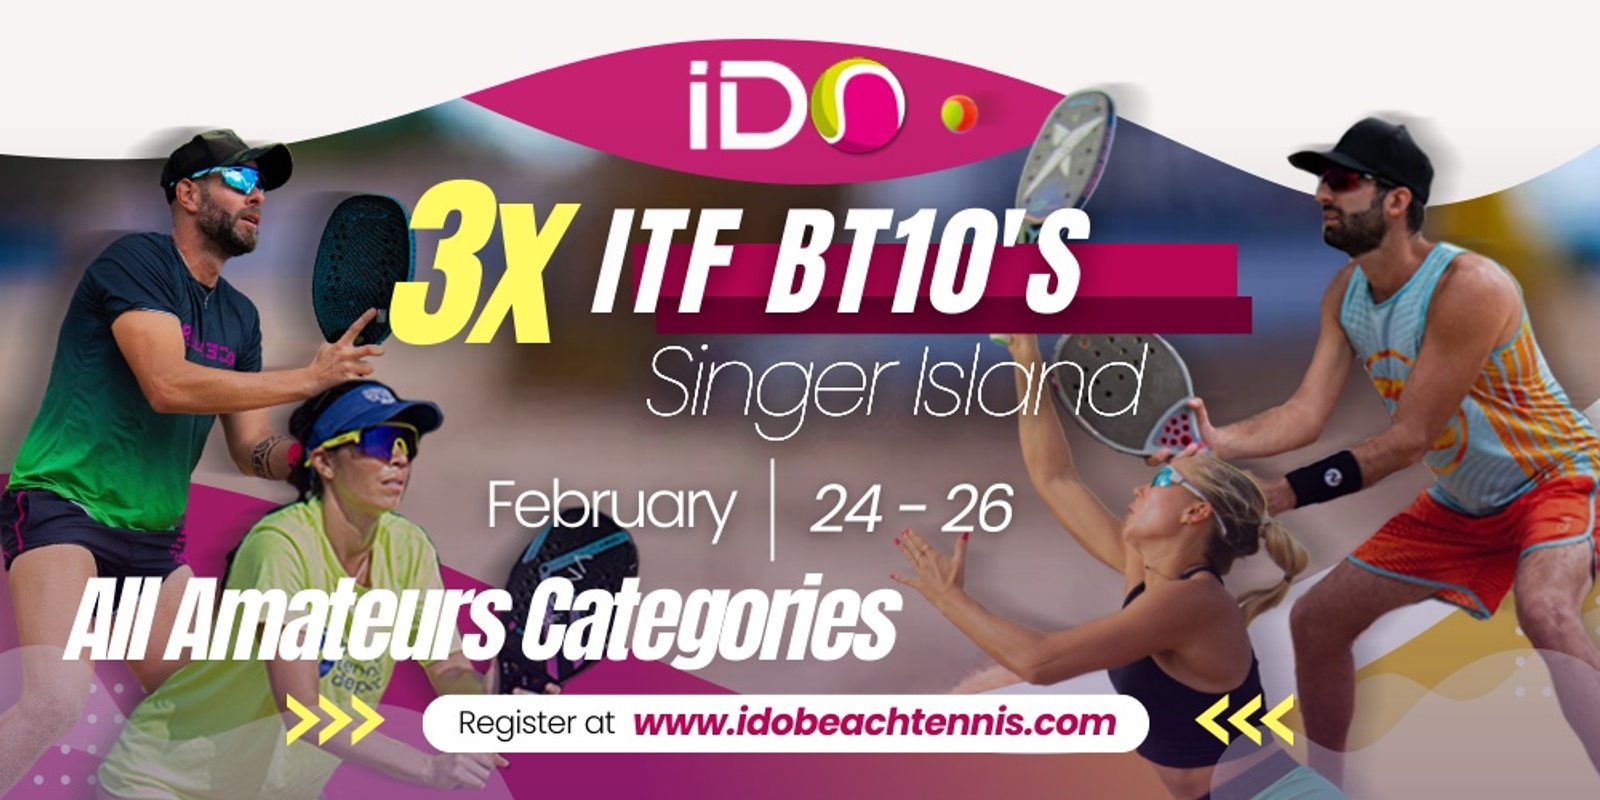 Banner image for I Do Beach Tennis 3xBT10 at Singer Island - Florida